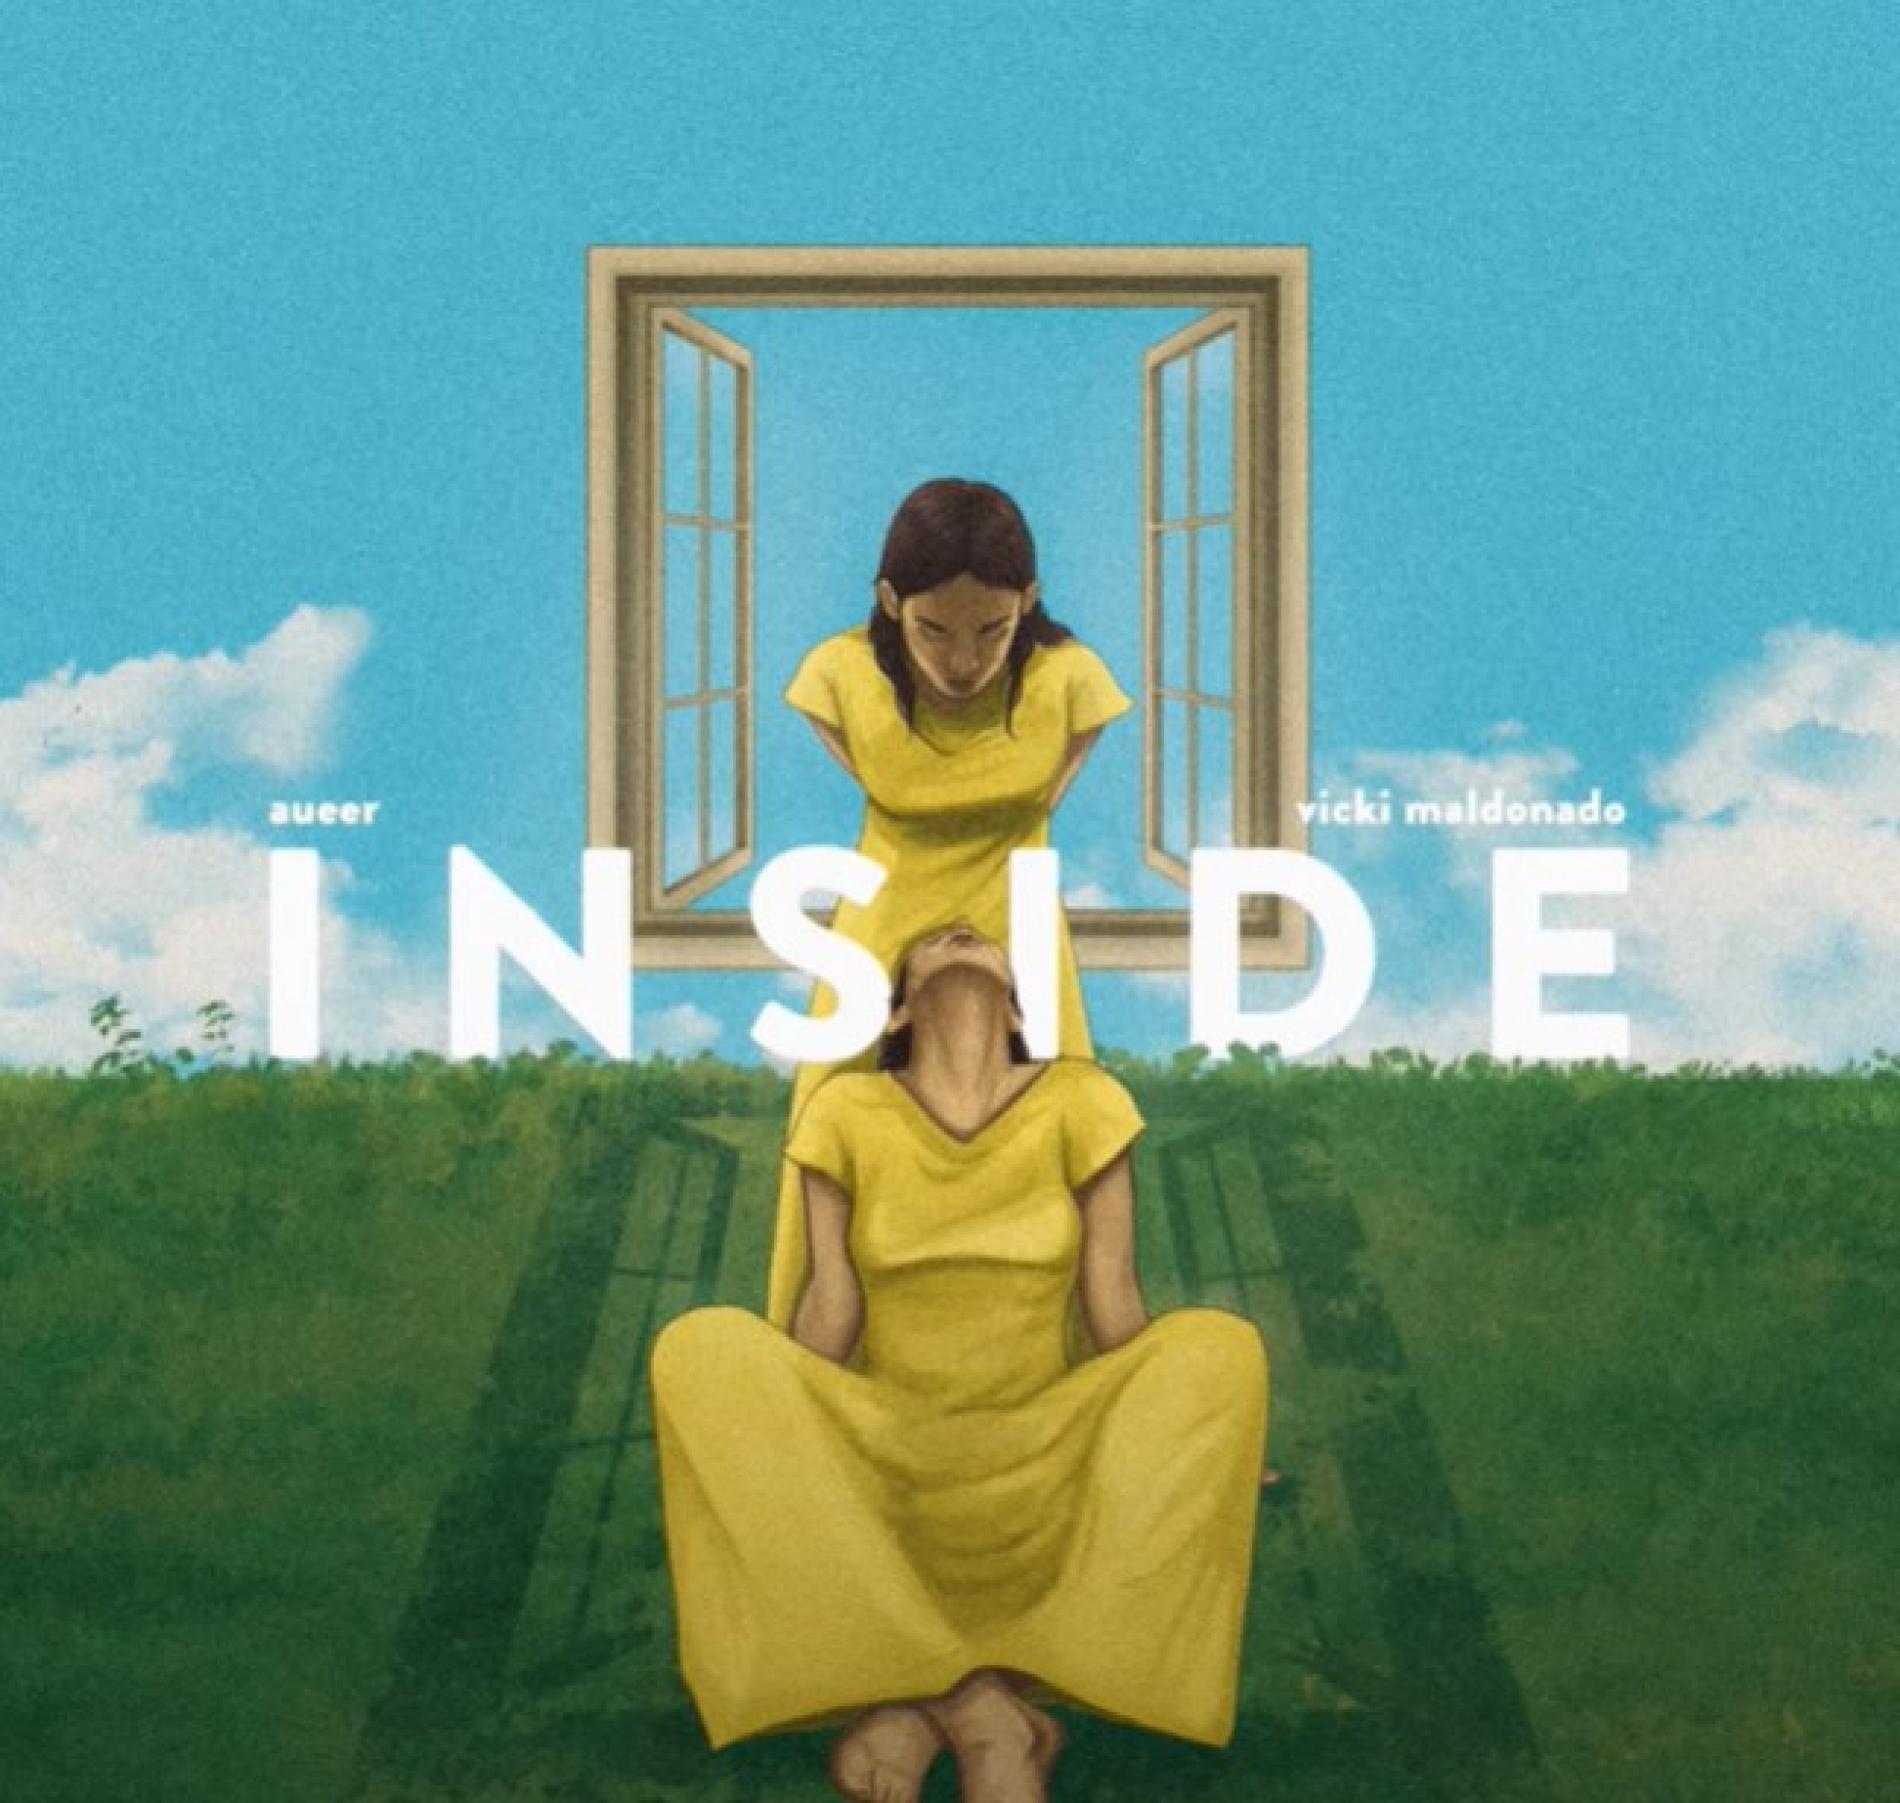 New Music : aueer – inside (feat. Vicki Maldonado) [Official Audio]